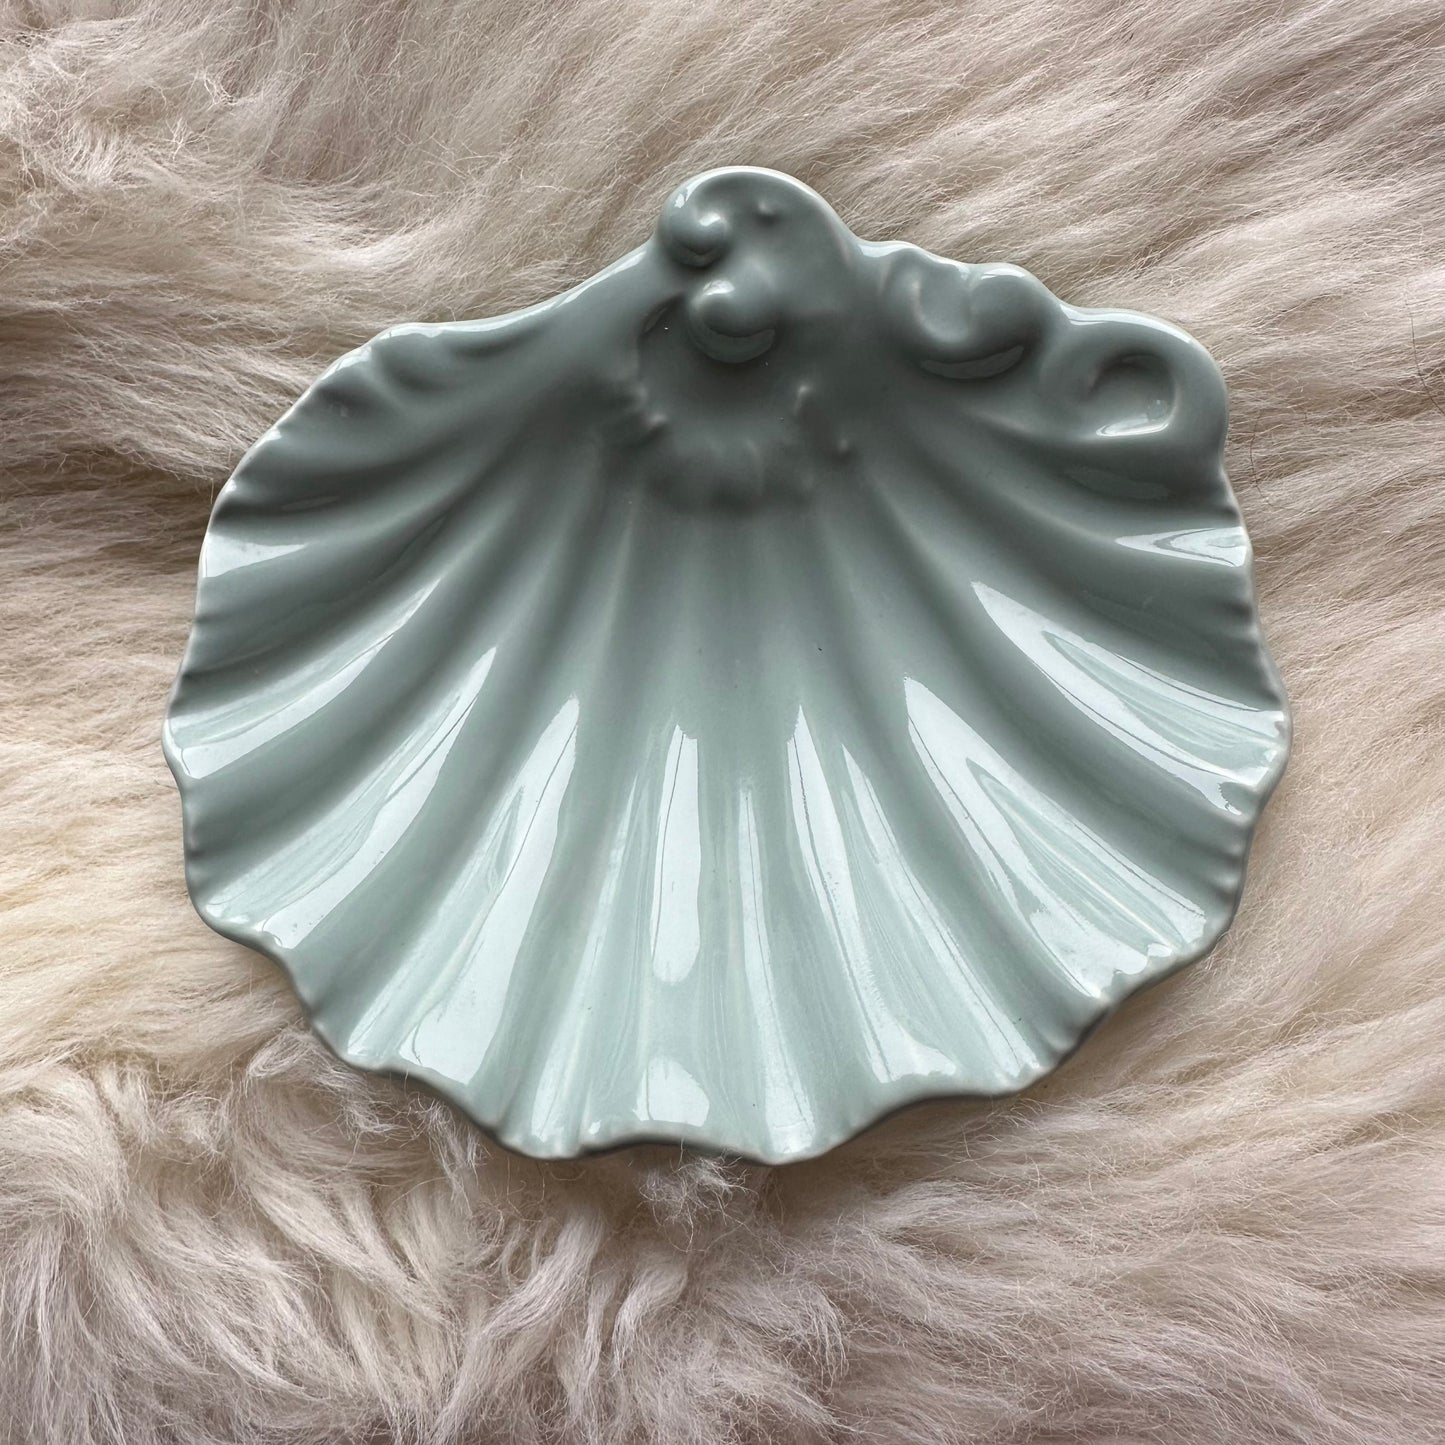 Pale Blue Shell Soap Dish